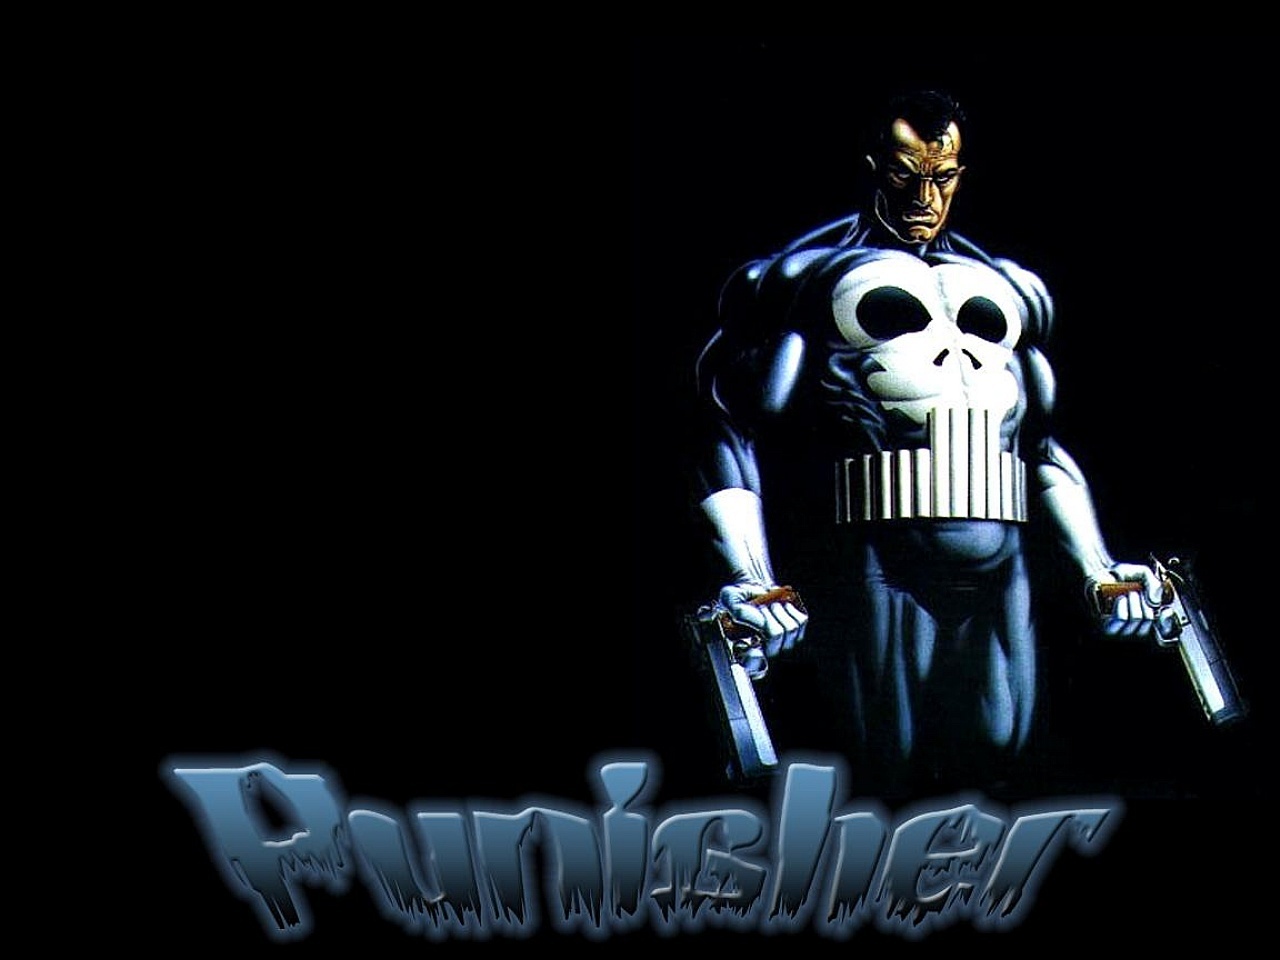 Punisher - Wallpaper Hot